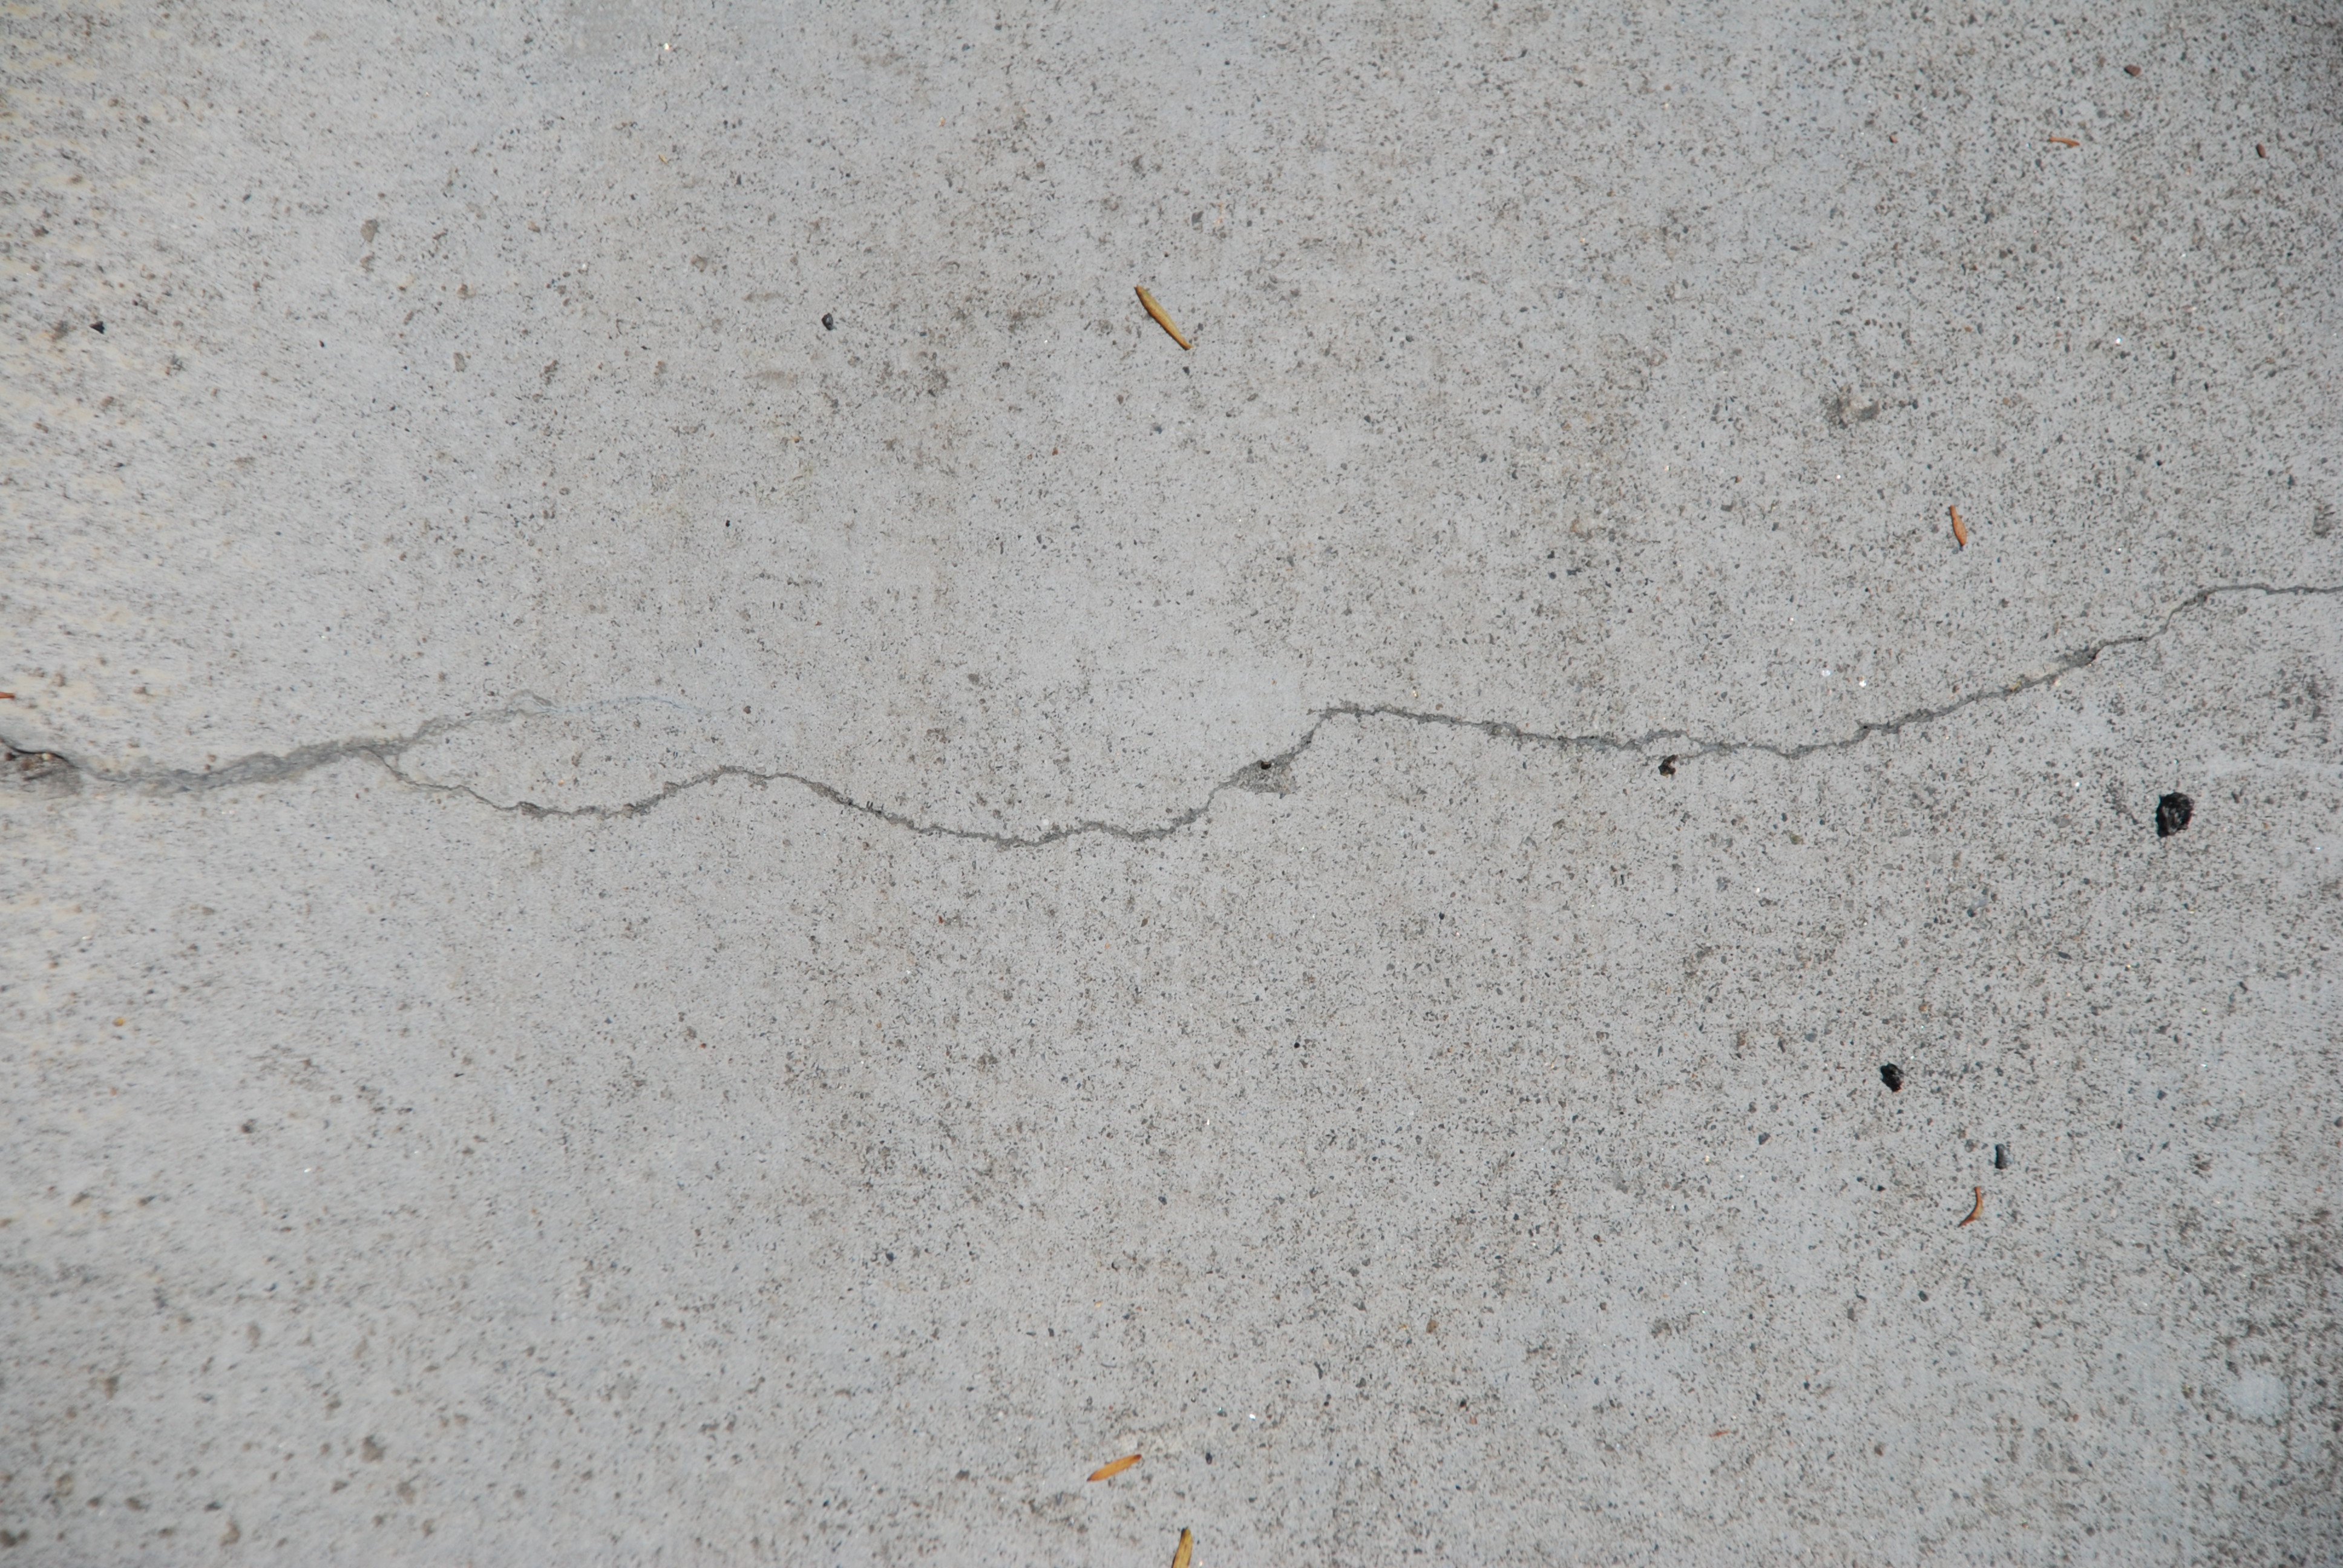 Cracked grunge concrete photo